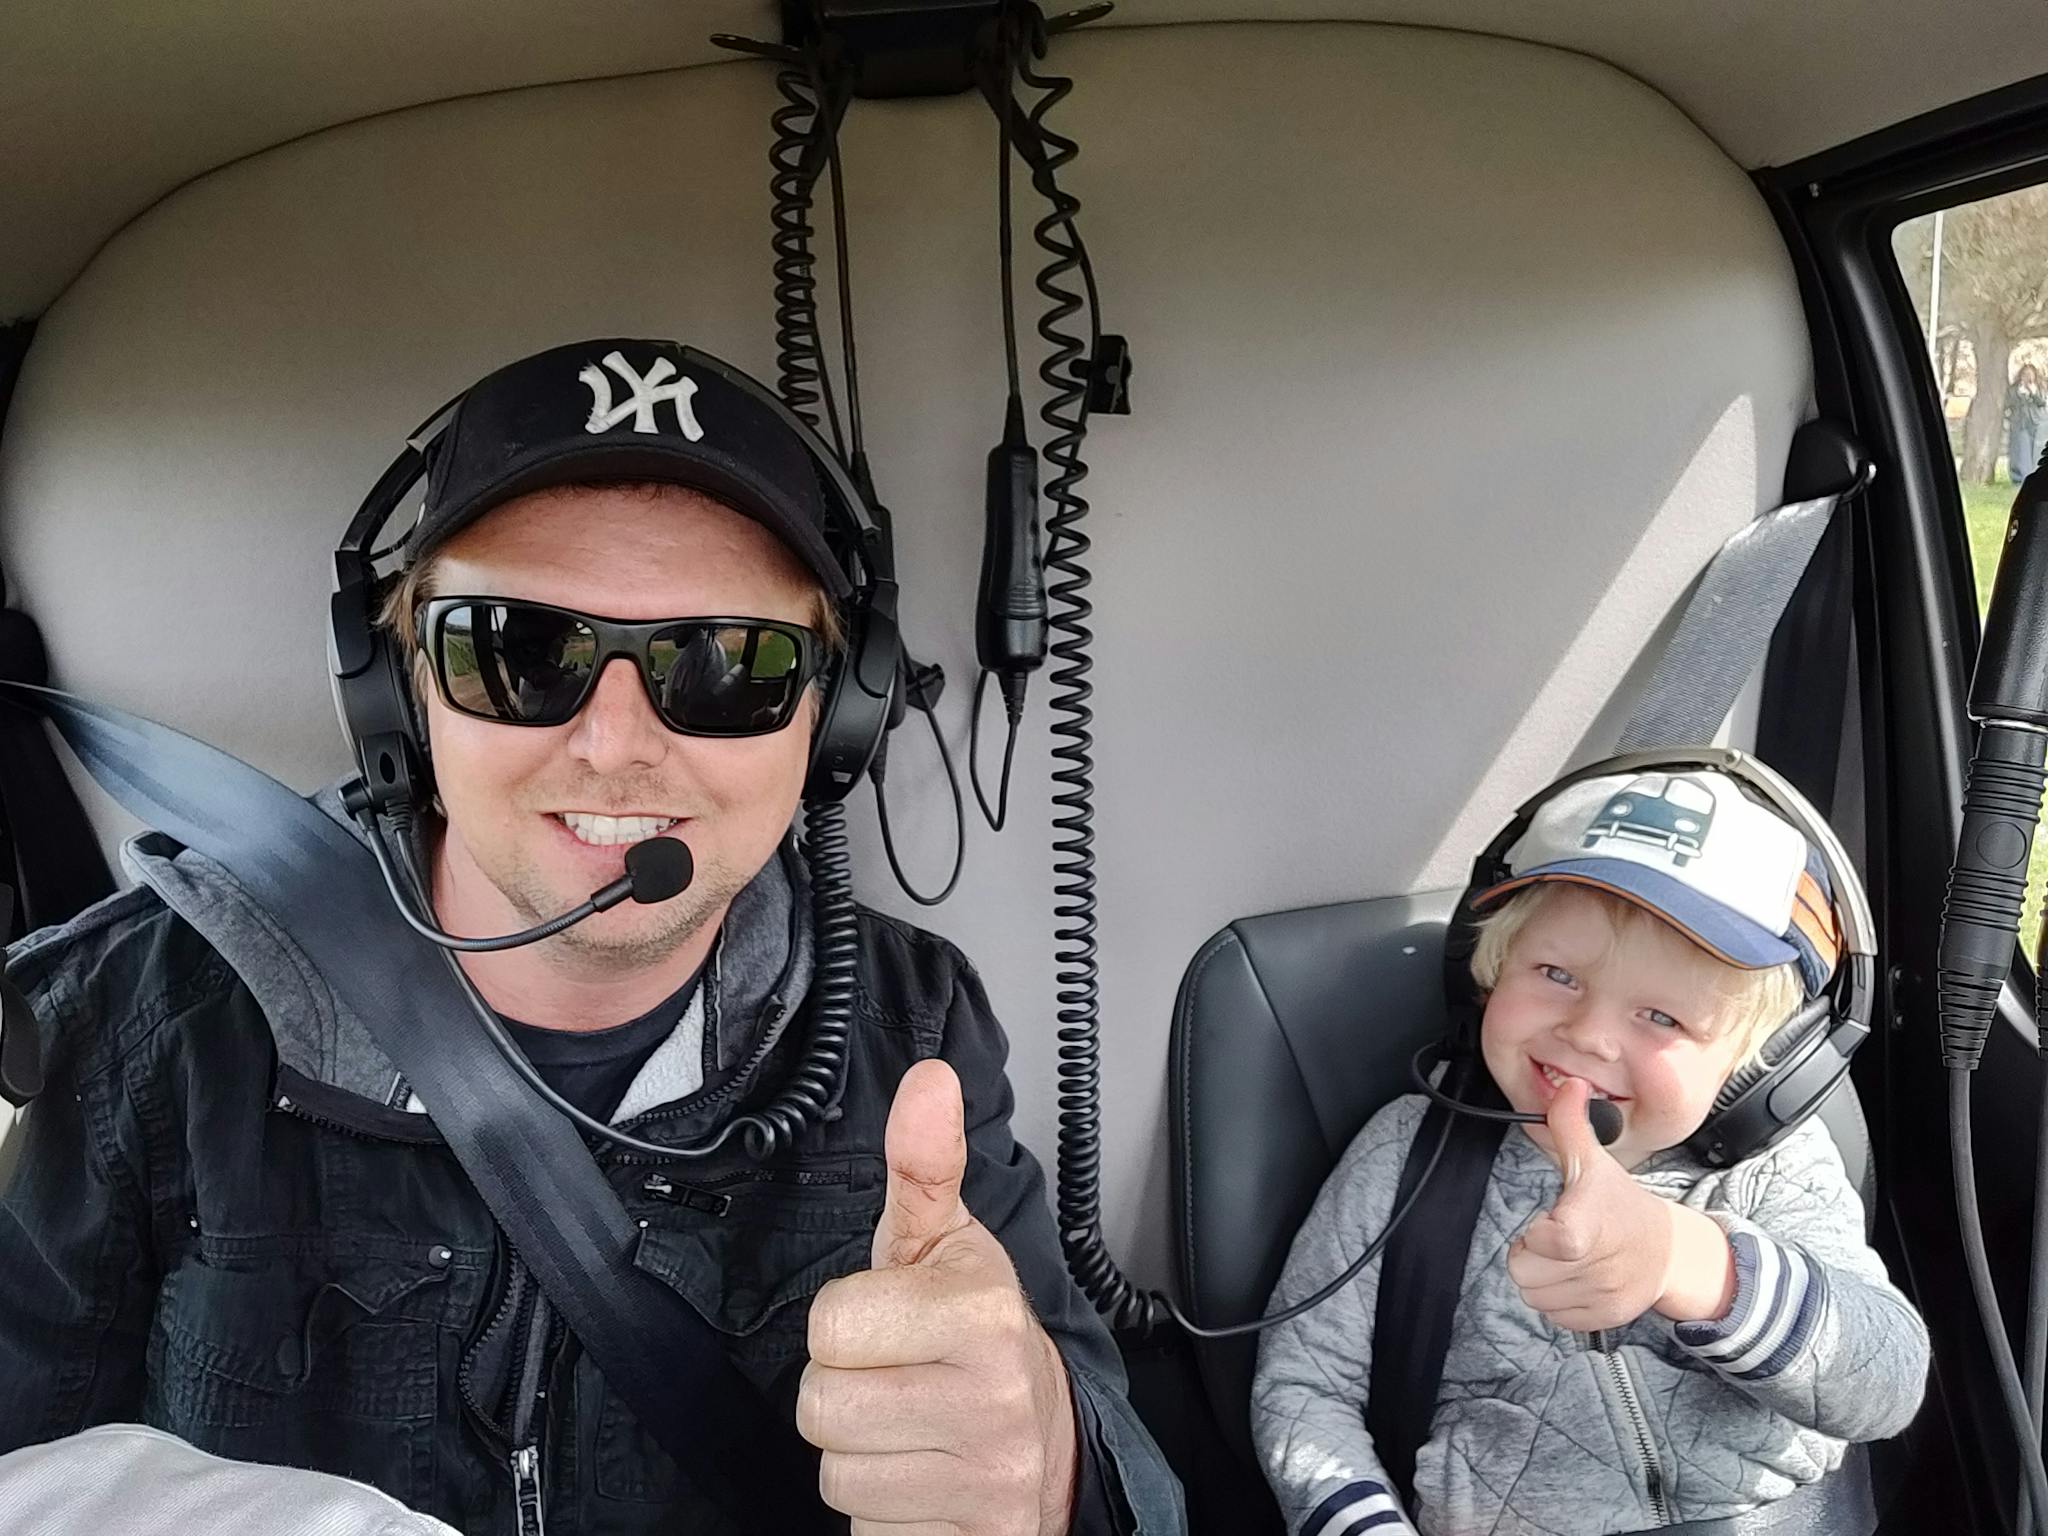 Kids enjoy flying too!